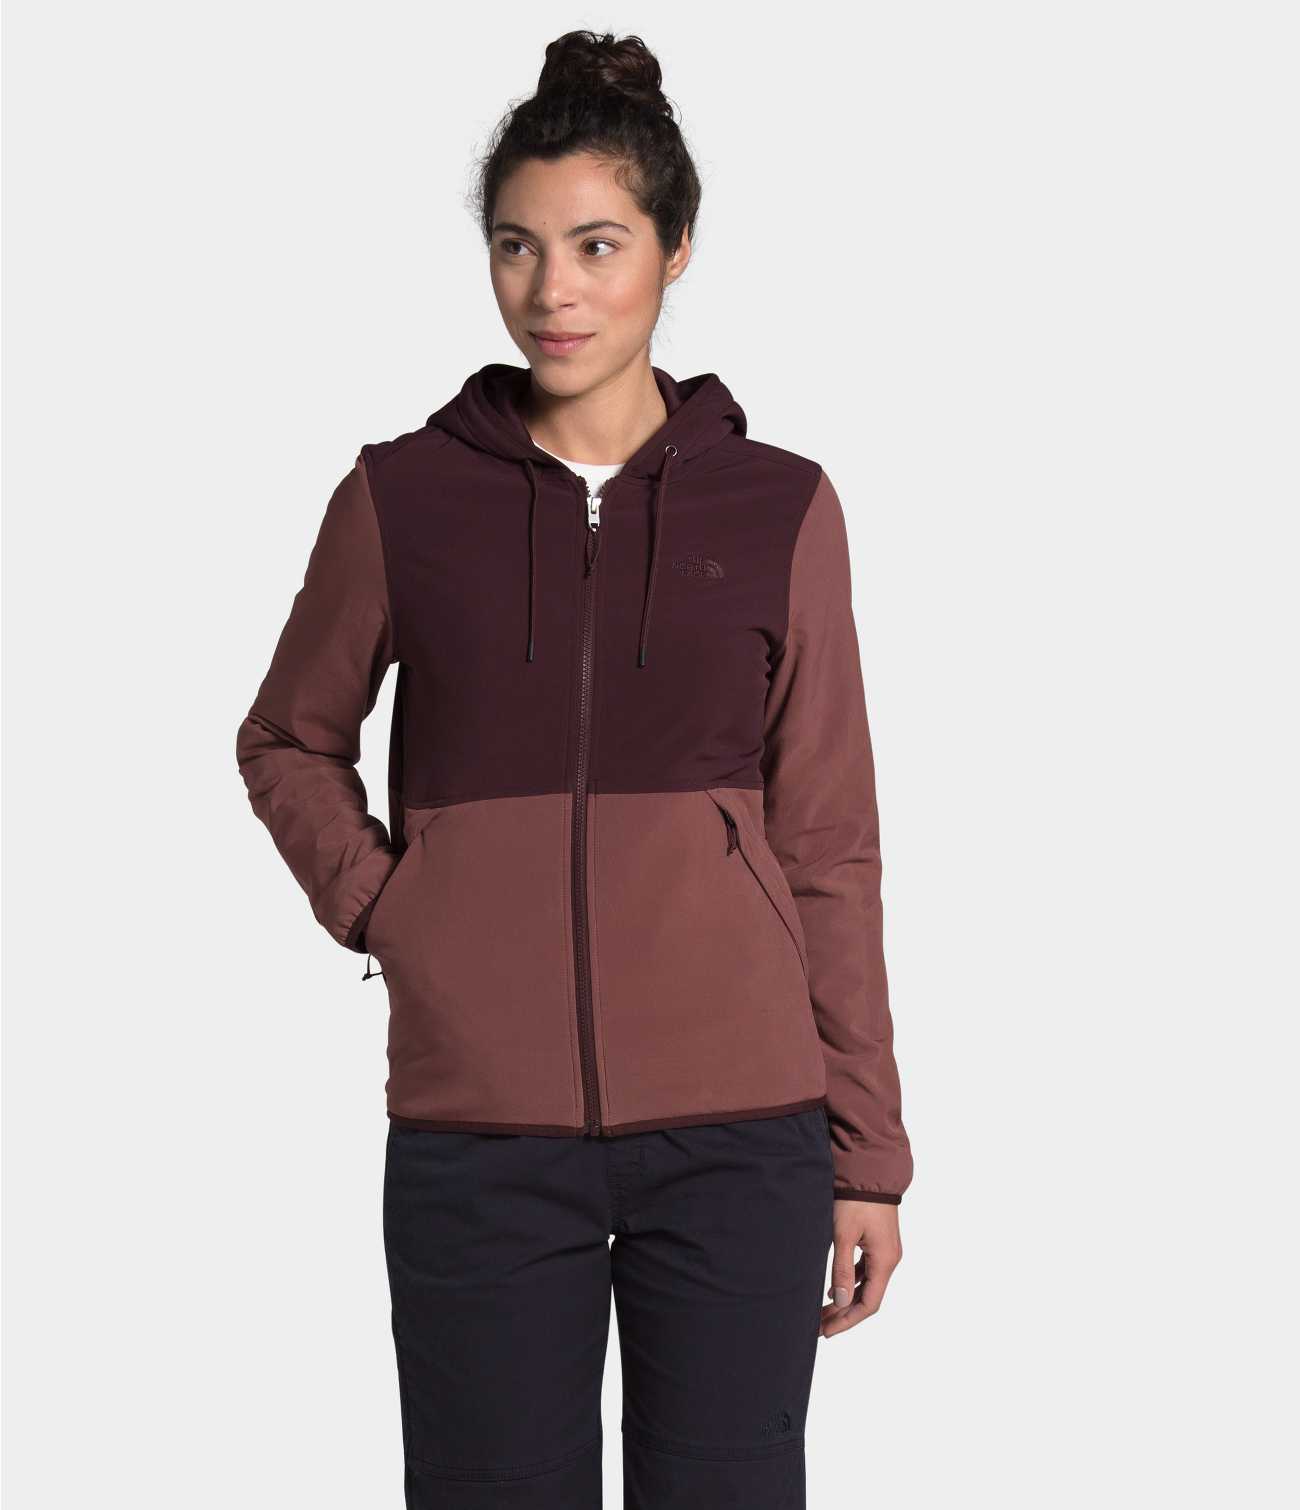 The North Face Size W Small Women's Sweatshirt – Rambleraven Gear